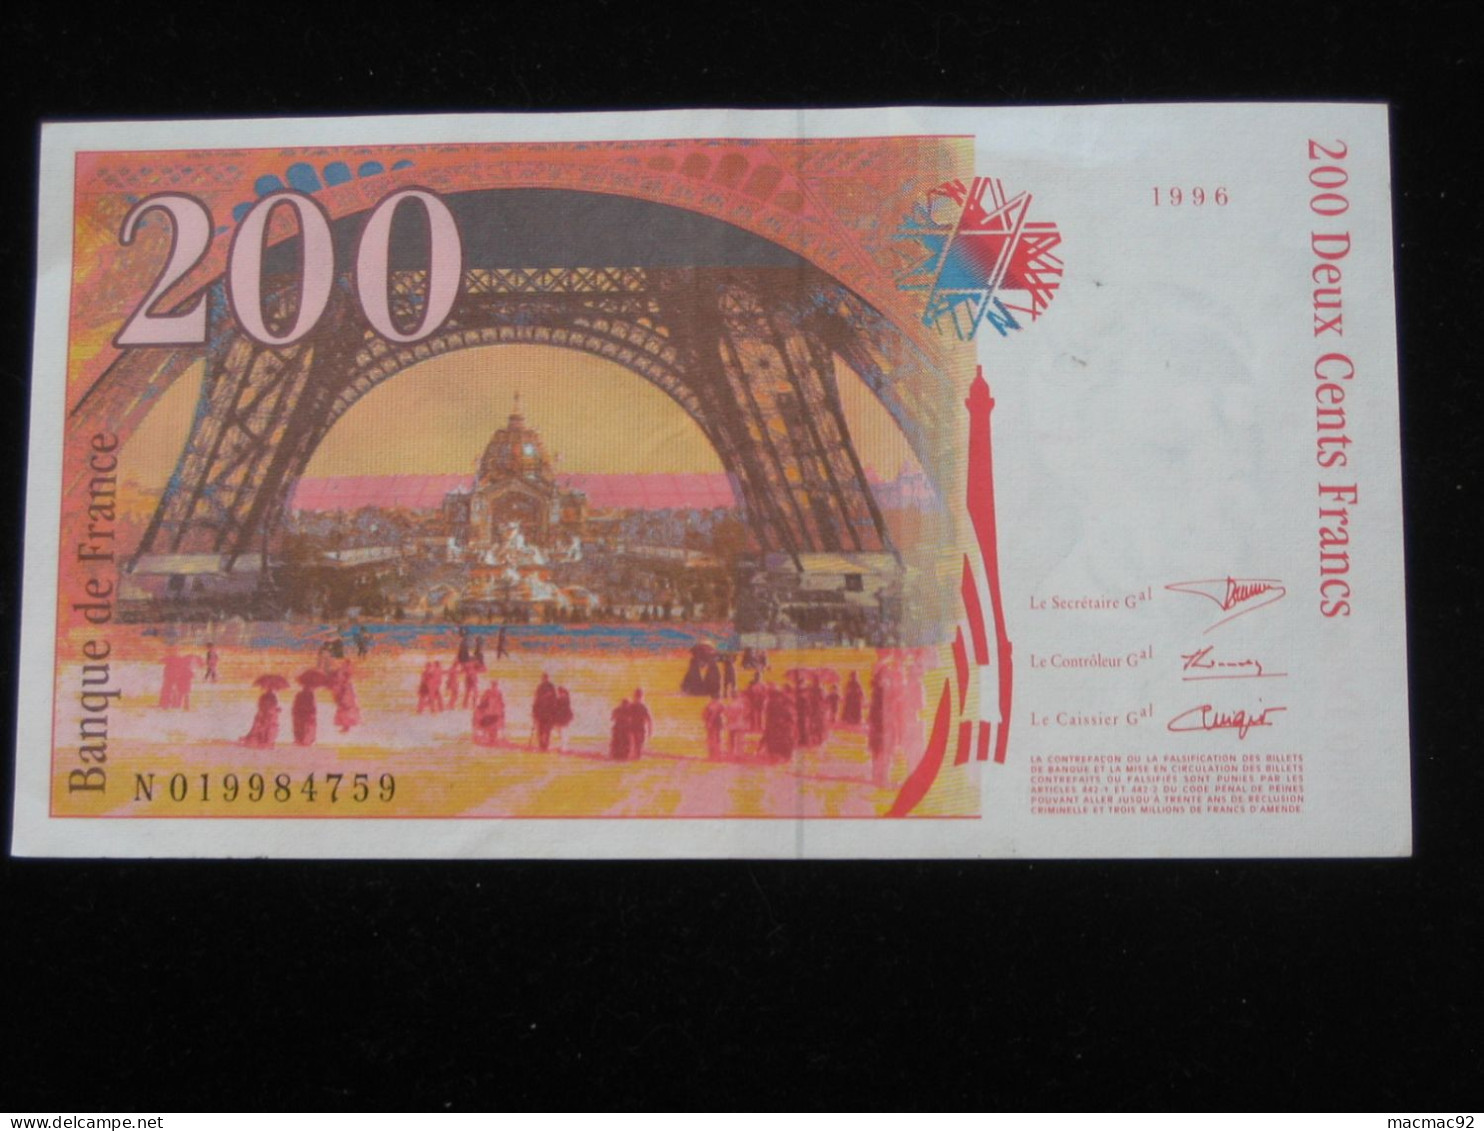 200 Cent Francs - Gustave EIFFEL  1996 - Billet SPL   **** EN ACHAT IMMEDIAT **** - 200 F 1995-1999 ''Eiffel''